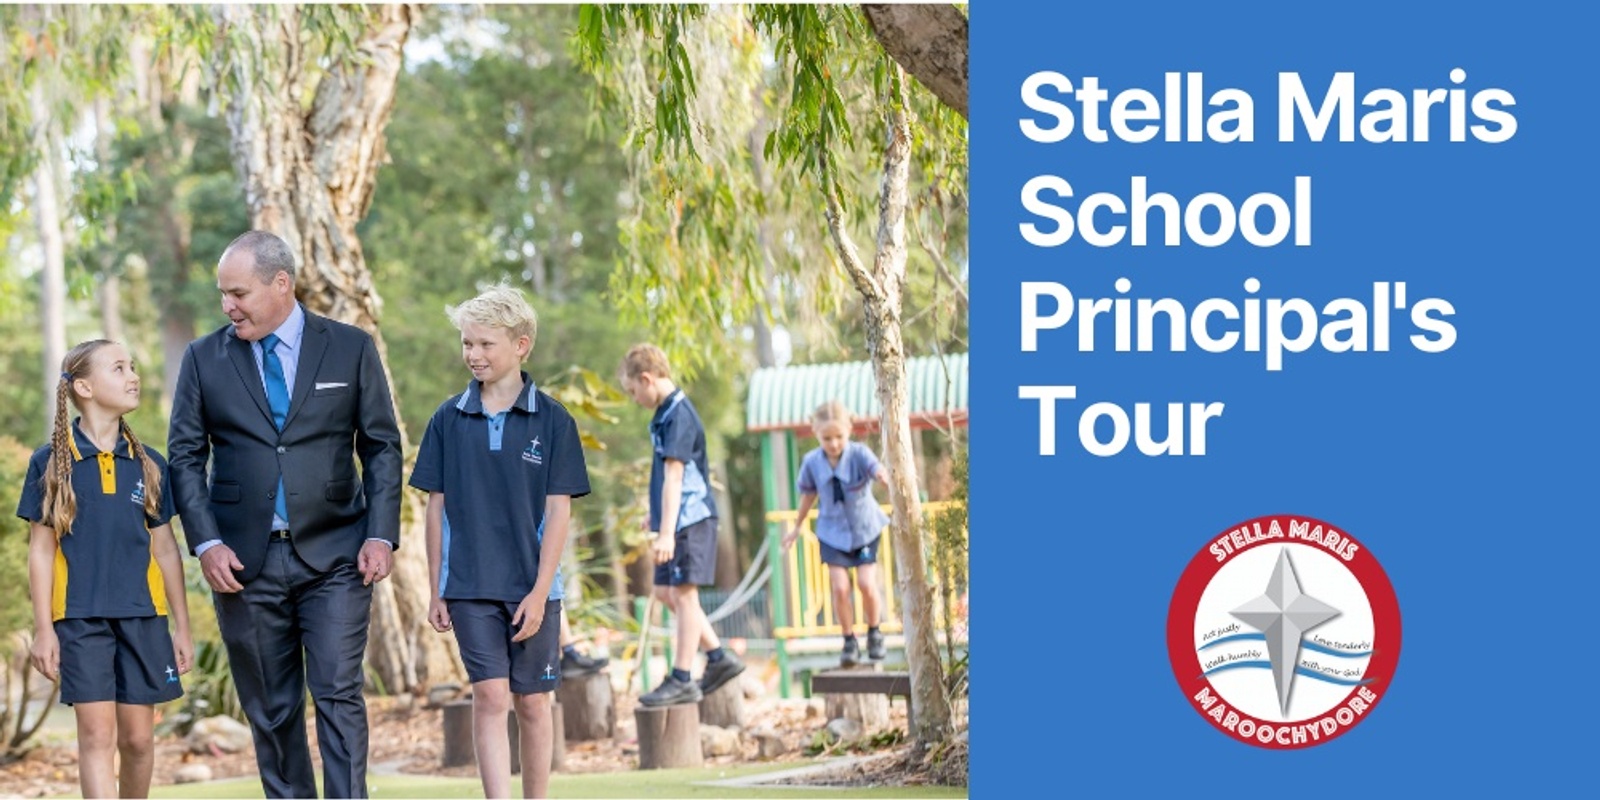 Stella Maris School Principal's Tour